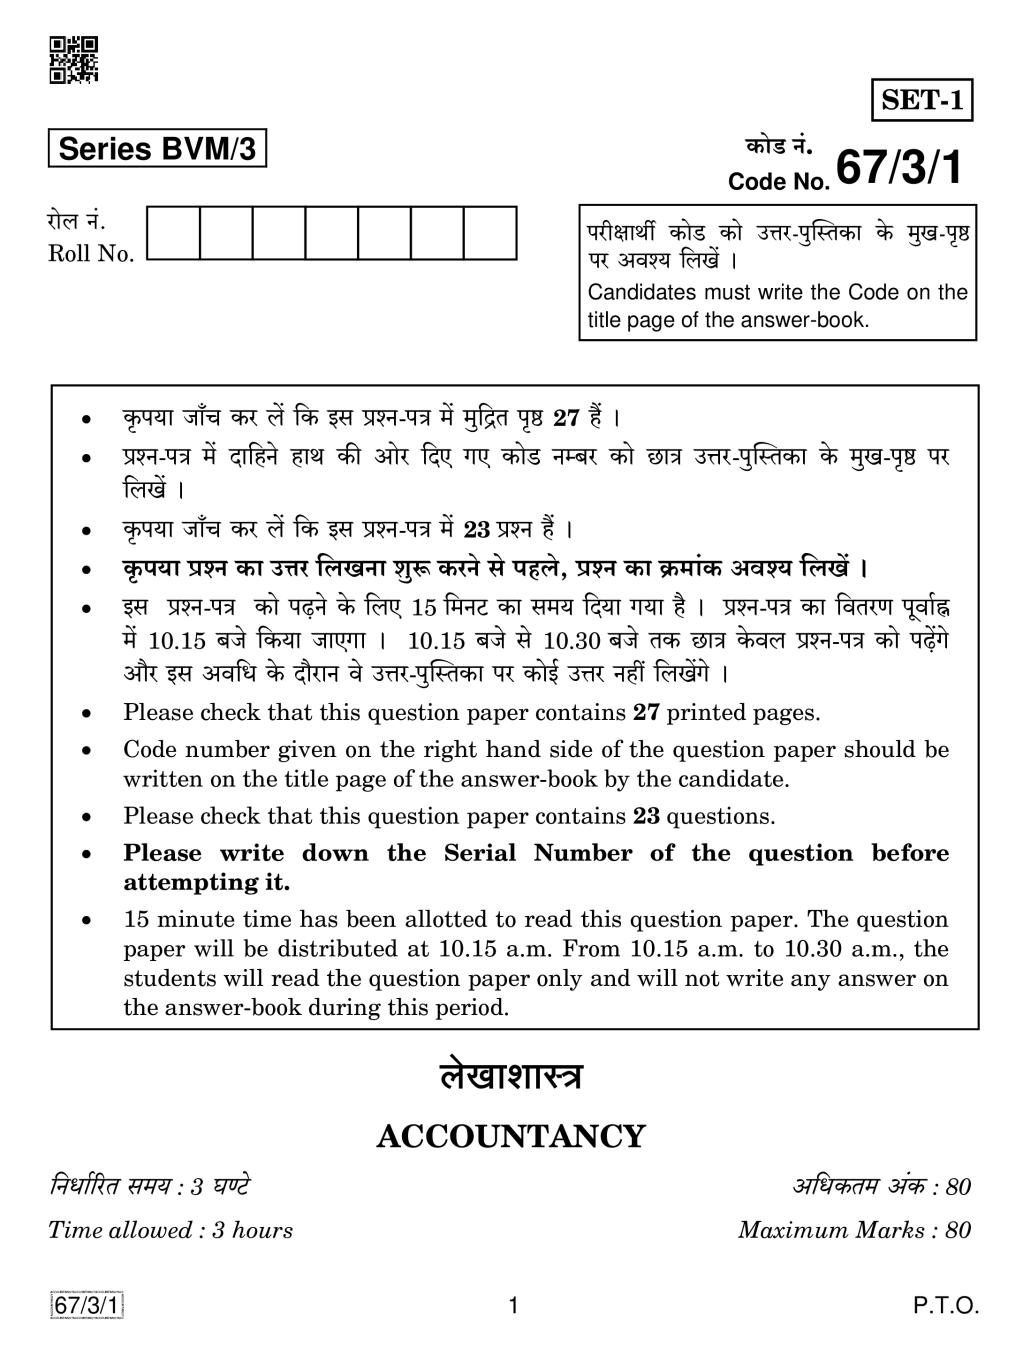 CBSE Class 12 Accountancy Question Paper 2019 Set 3 - Page 1